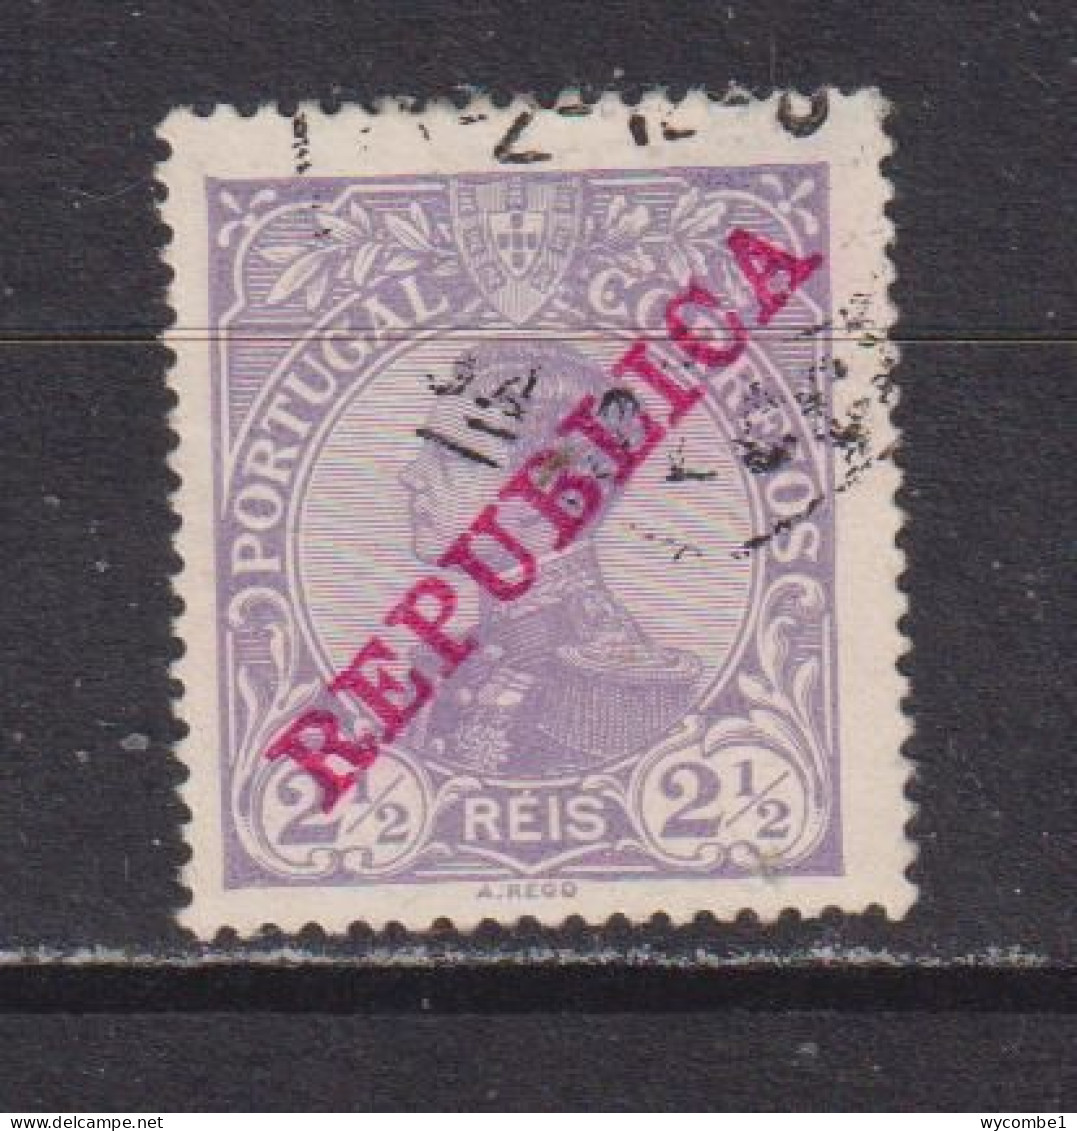 PORTUGAL - 1910 Republica  21/2r  Used As Scan - Usati